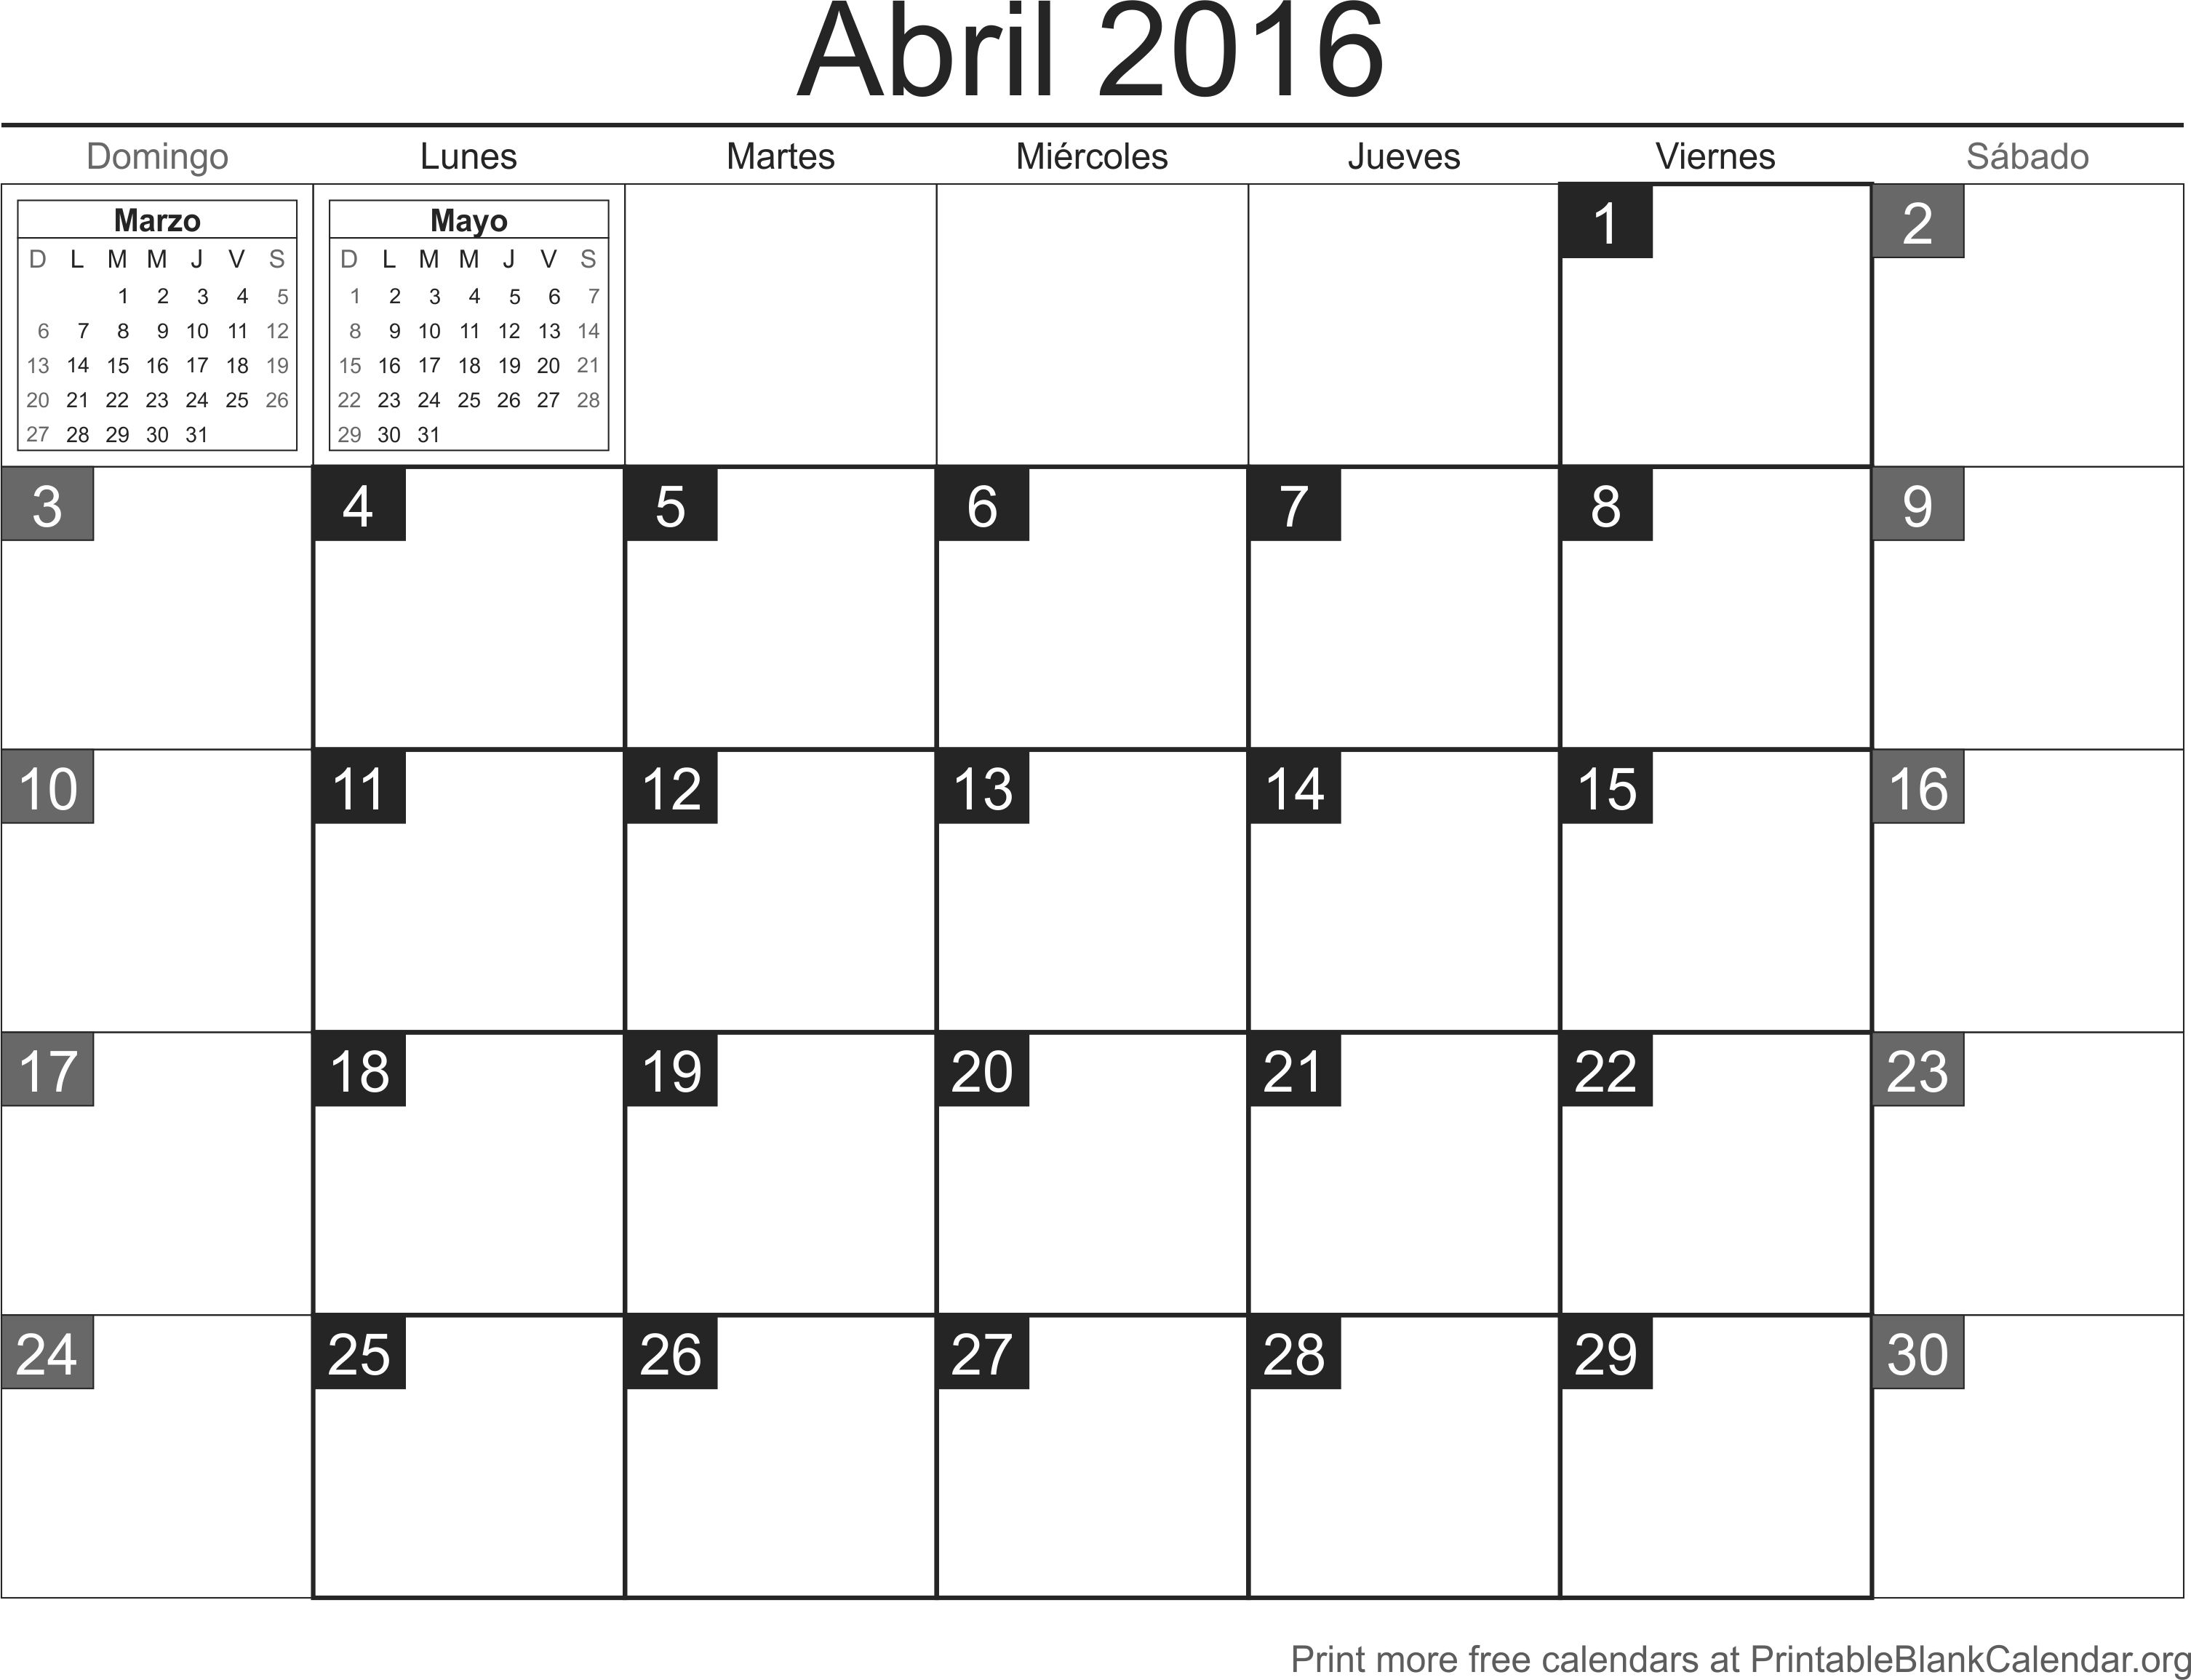 Calendario para imprimir Abril 2016